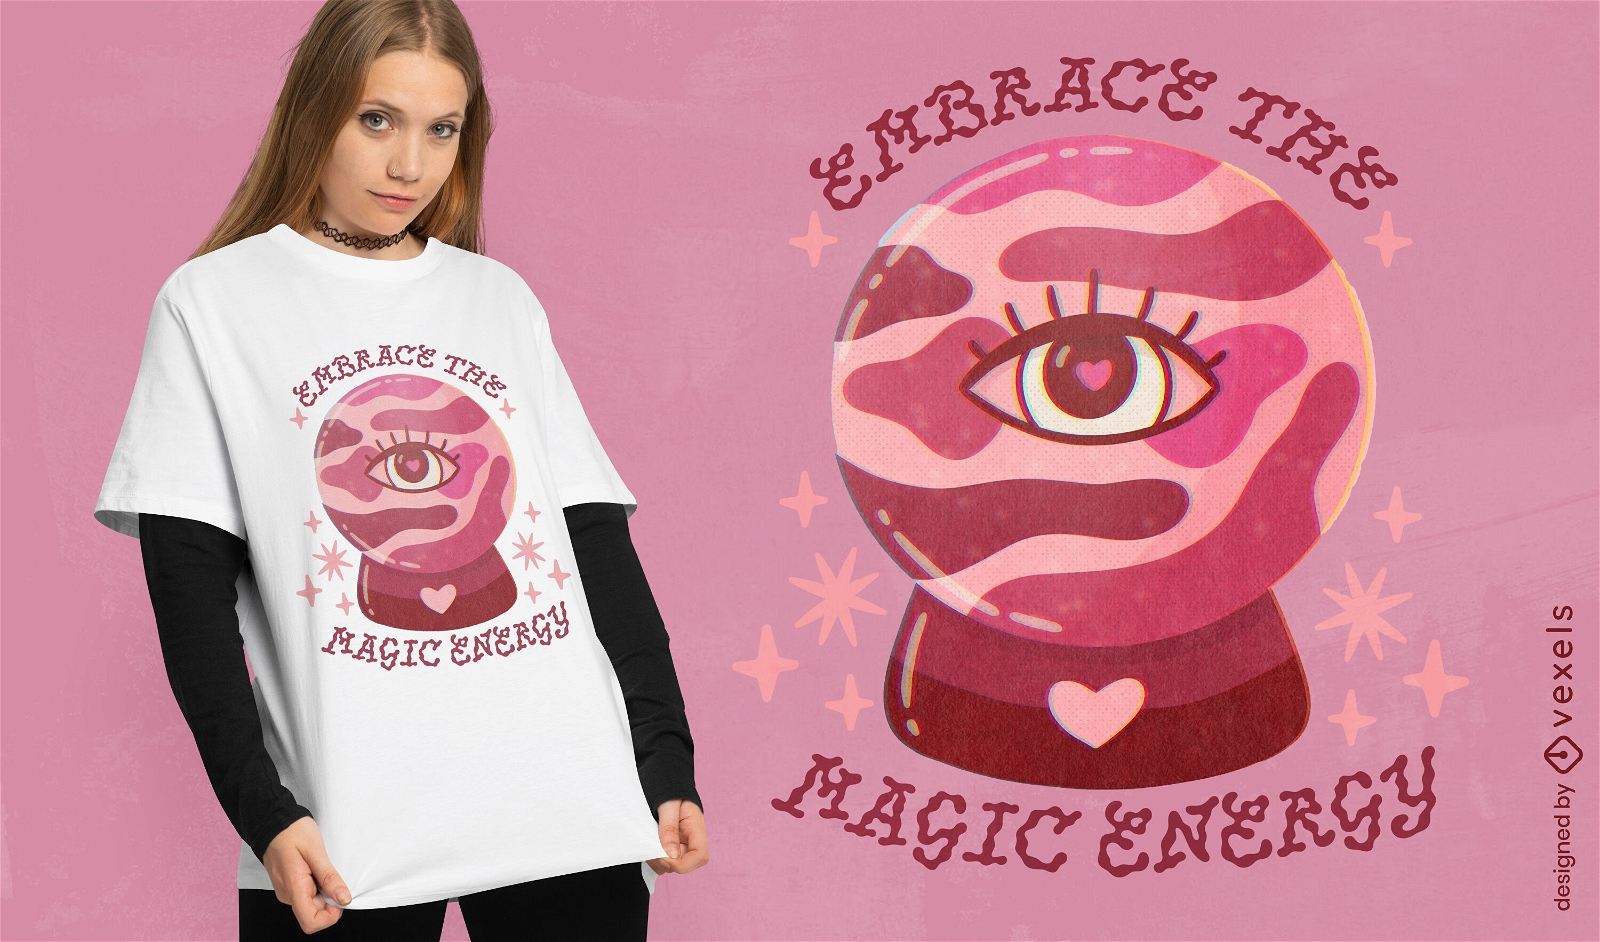 Mystical vision t-shirt design